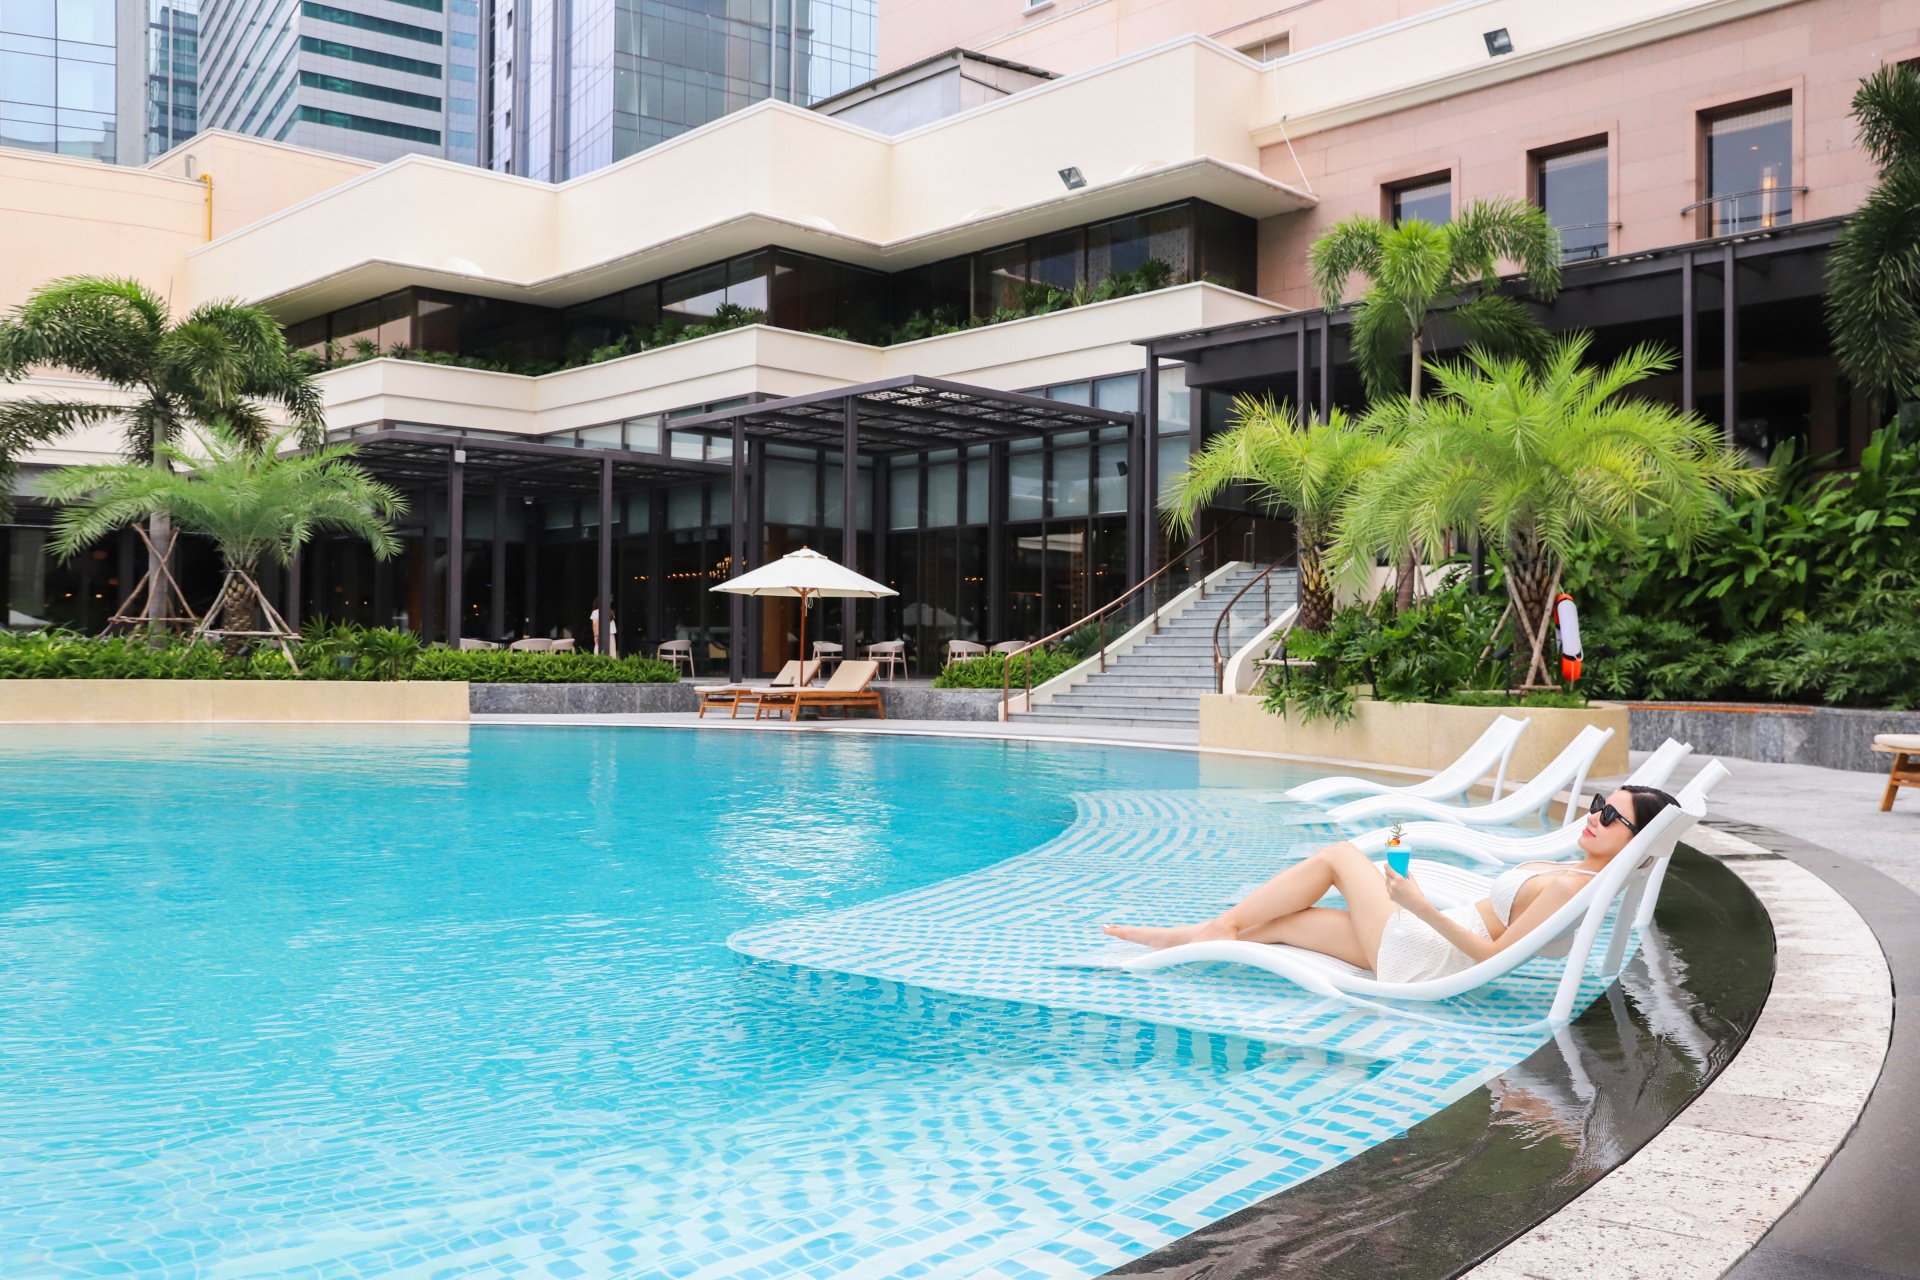 Lotte Hotel Saigon launches urban oasis